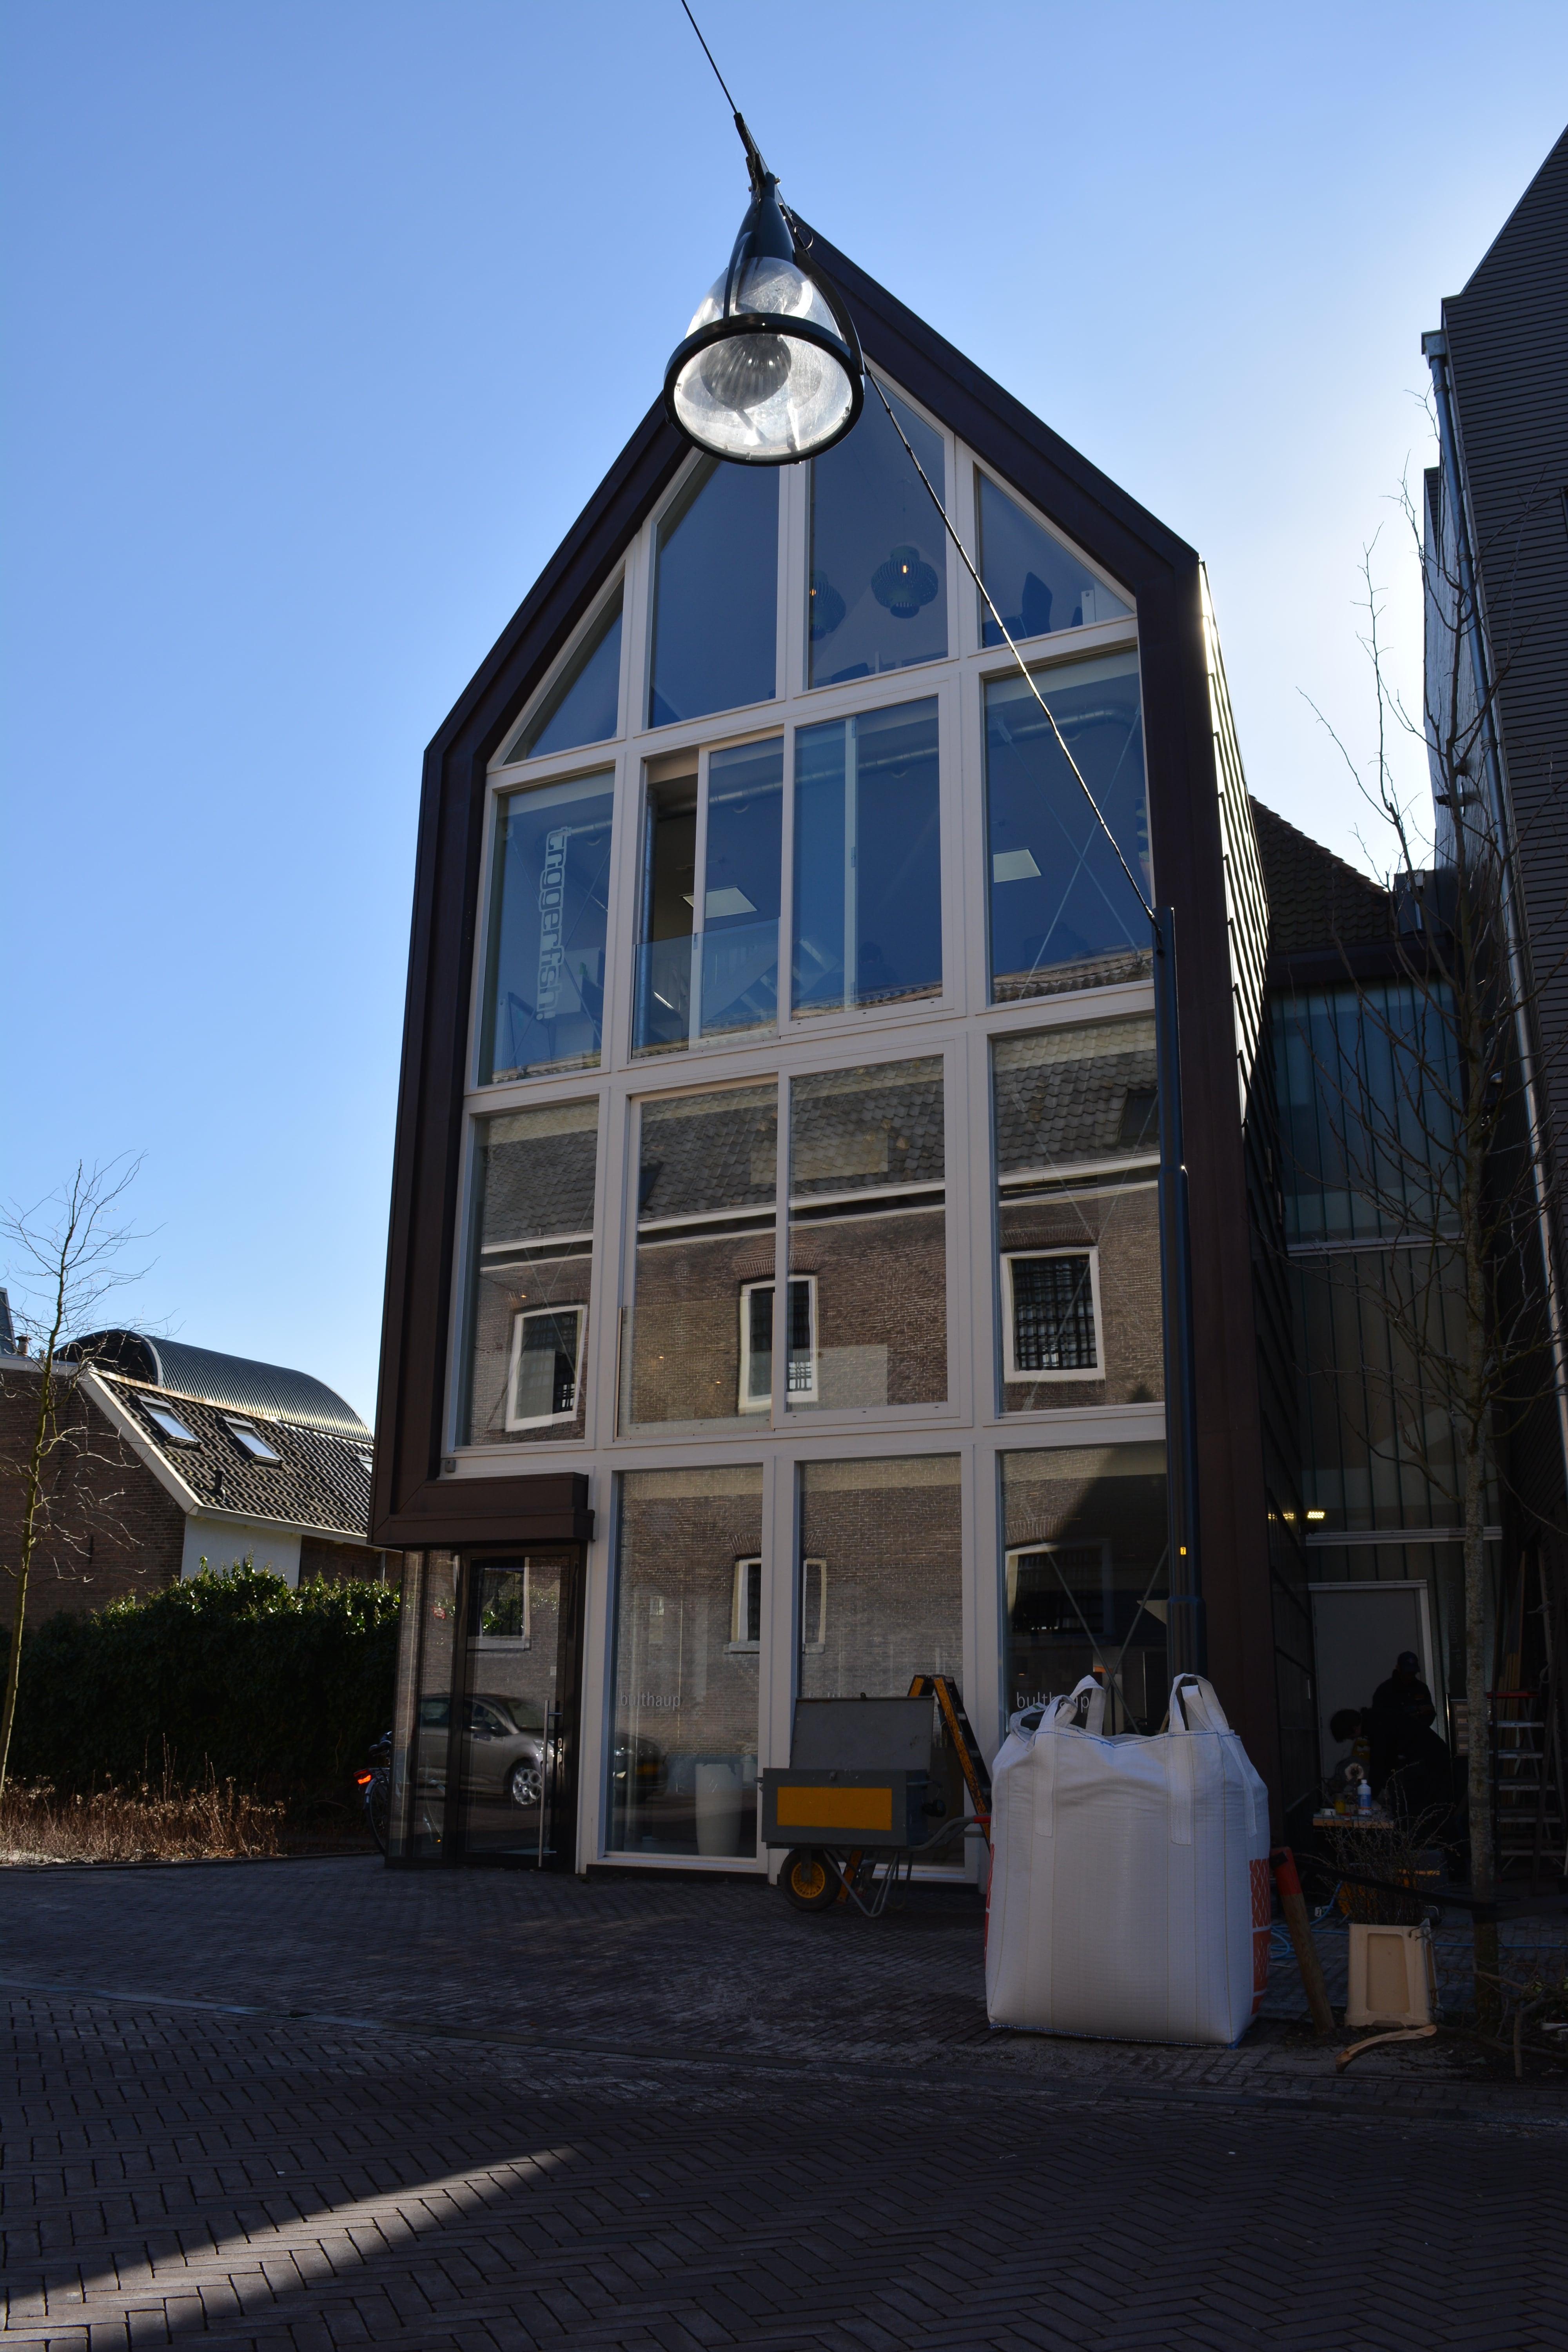 Uitbreiding Bulthaup Zwolle - Ontwerp: Architectuurstudio Sitec BNA